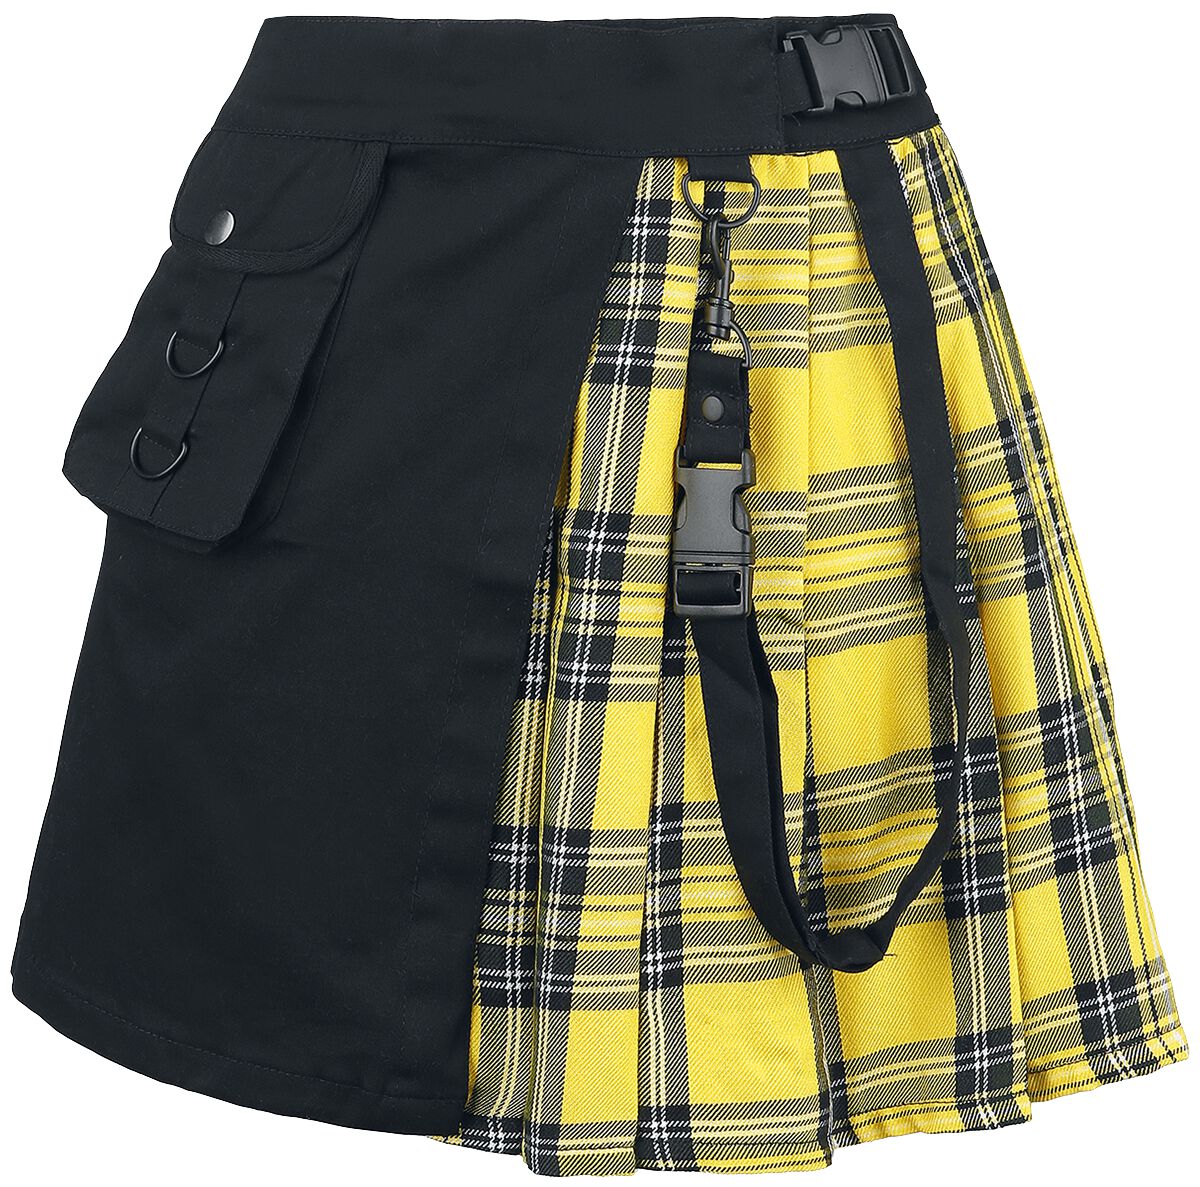 Chemical Black Infinity Skirt Kurzer Rock schwarz gelb in M